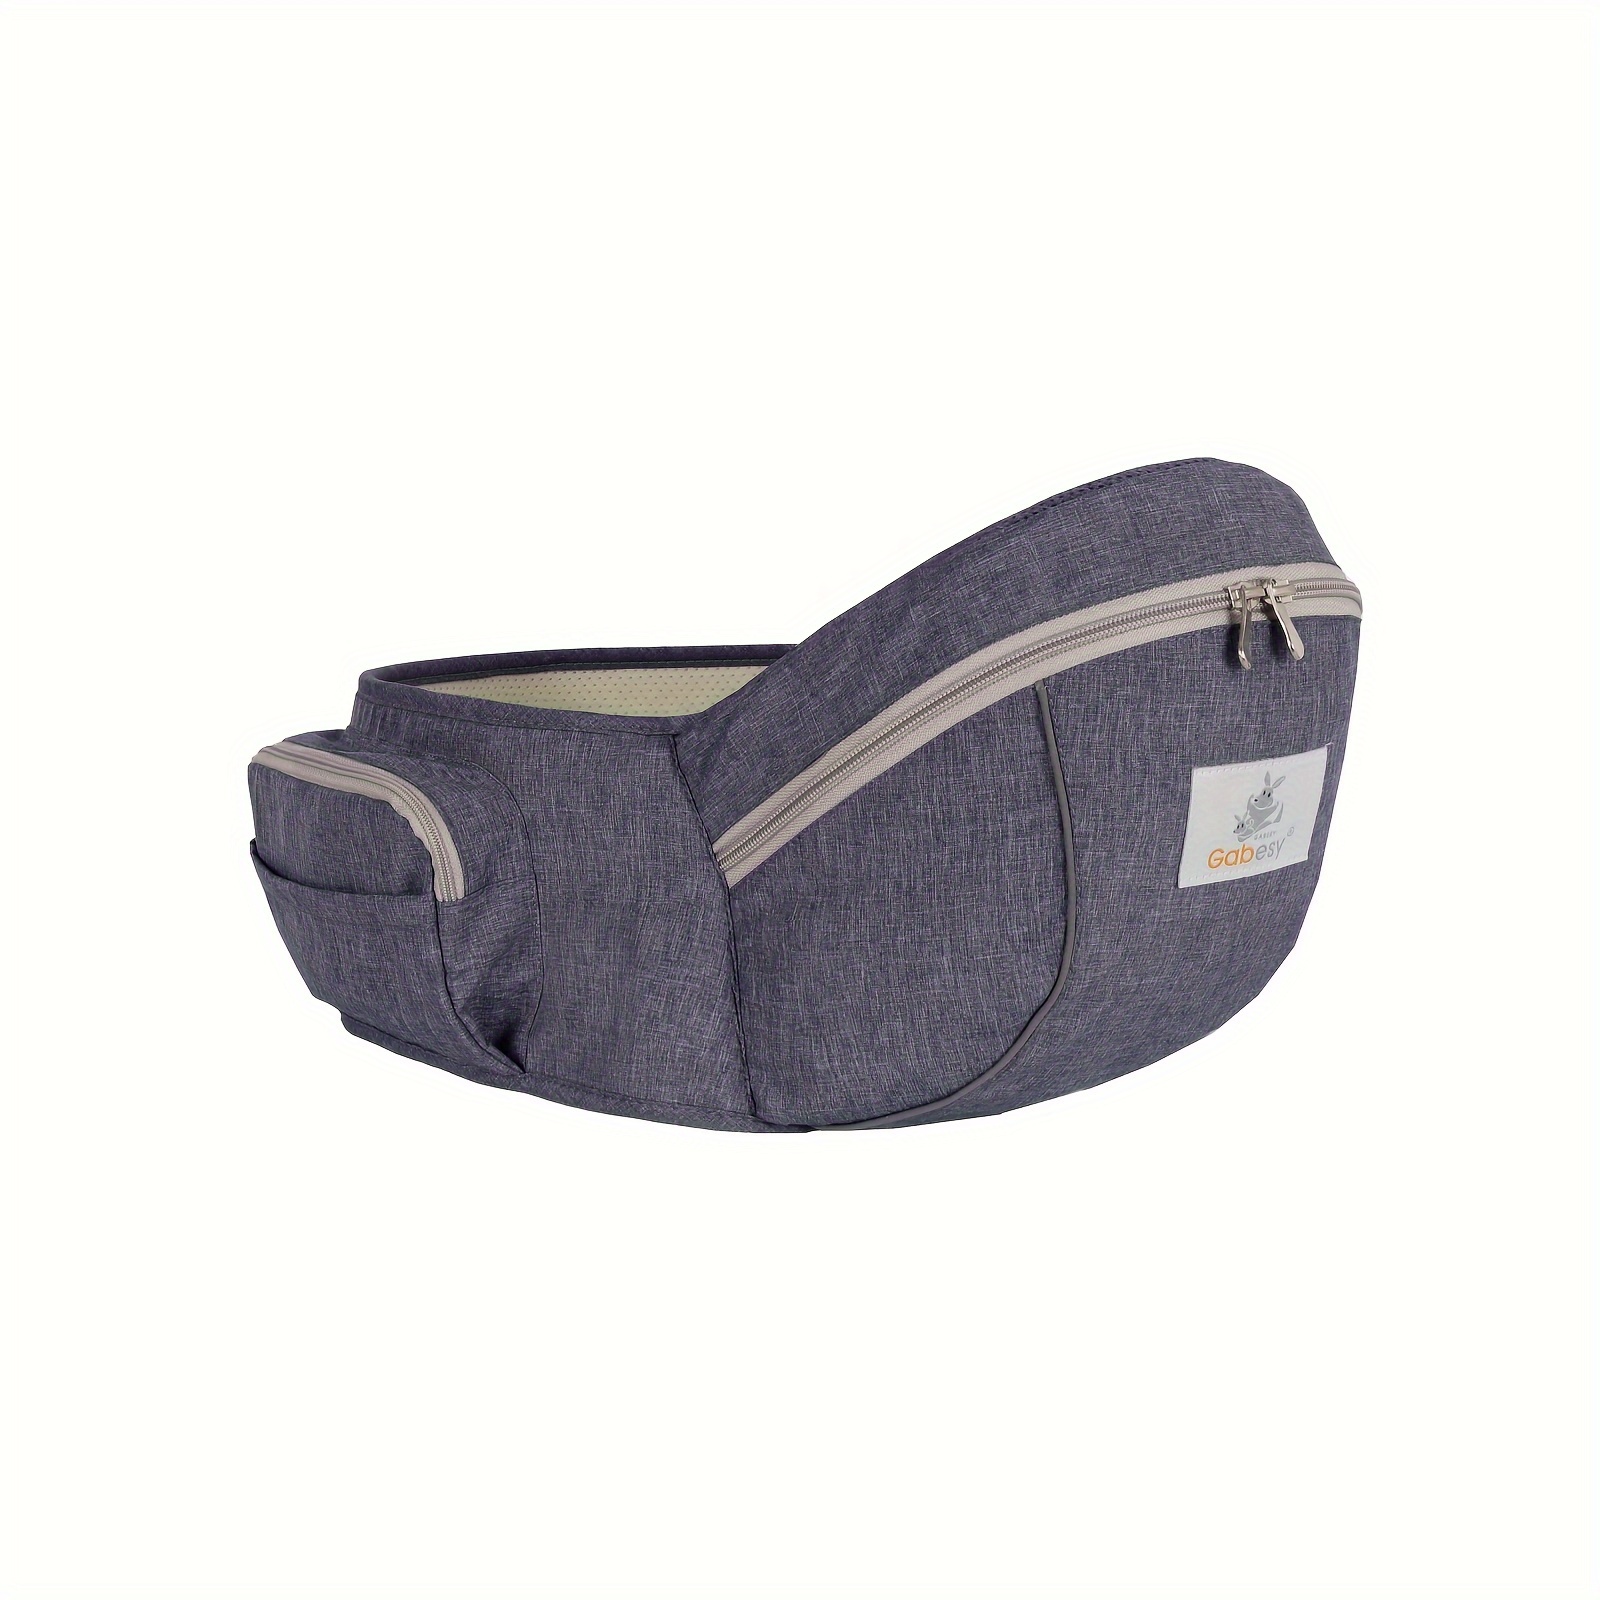 Lictin Infant Toddler Baby hip waist tush seat ~ BRAND NEW ~ portable GRAY